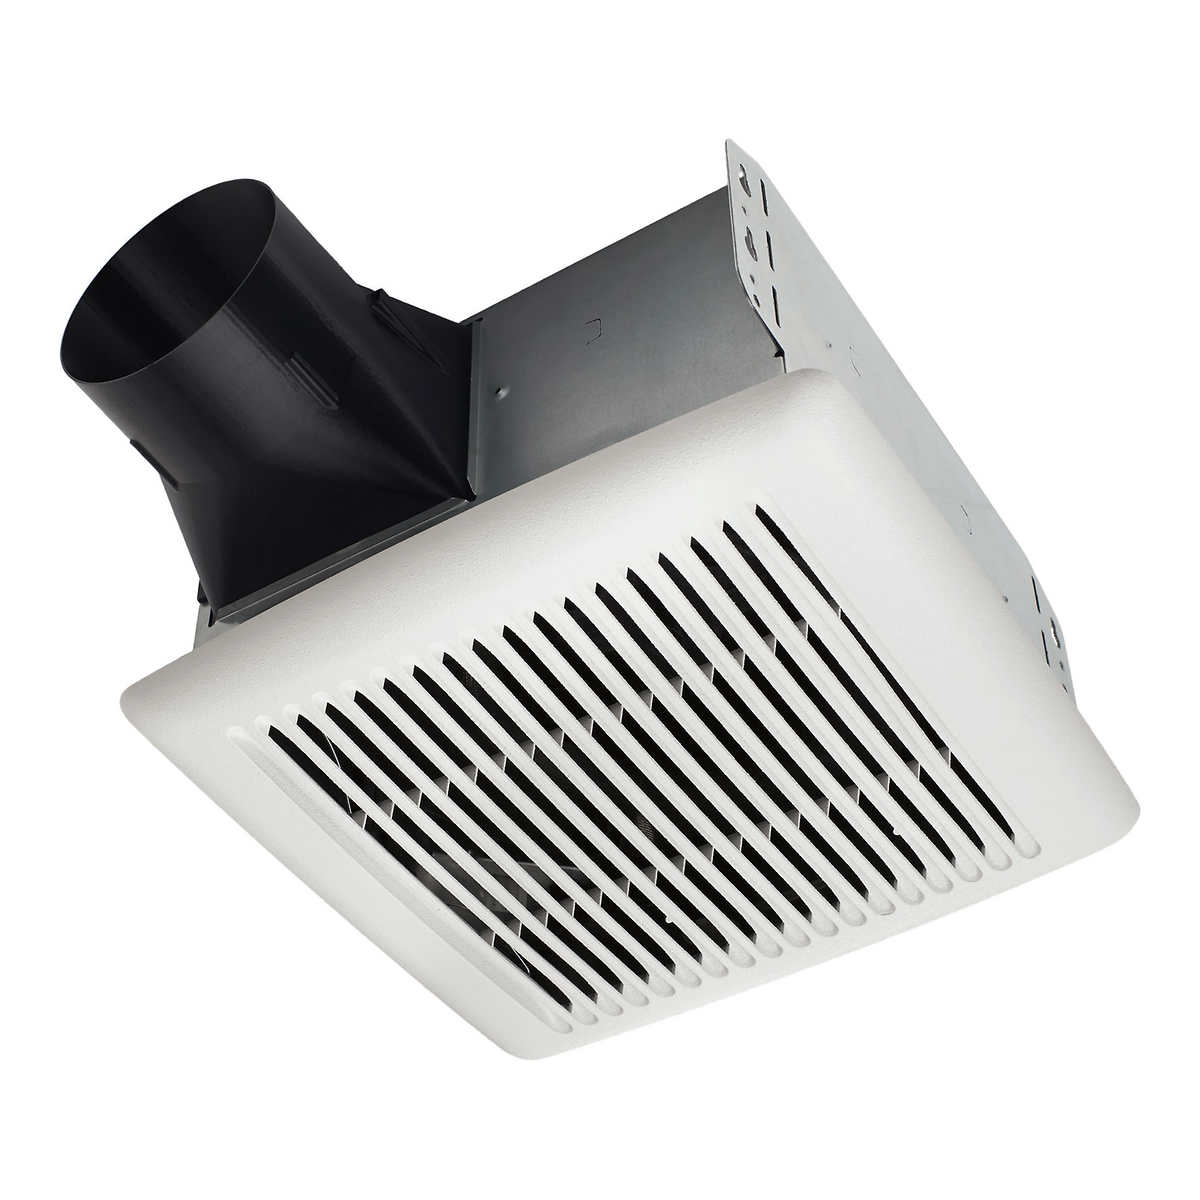 Broan High Volume Bath Fan And Humidity, Costco Bathroom Fan With Light